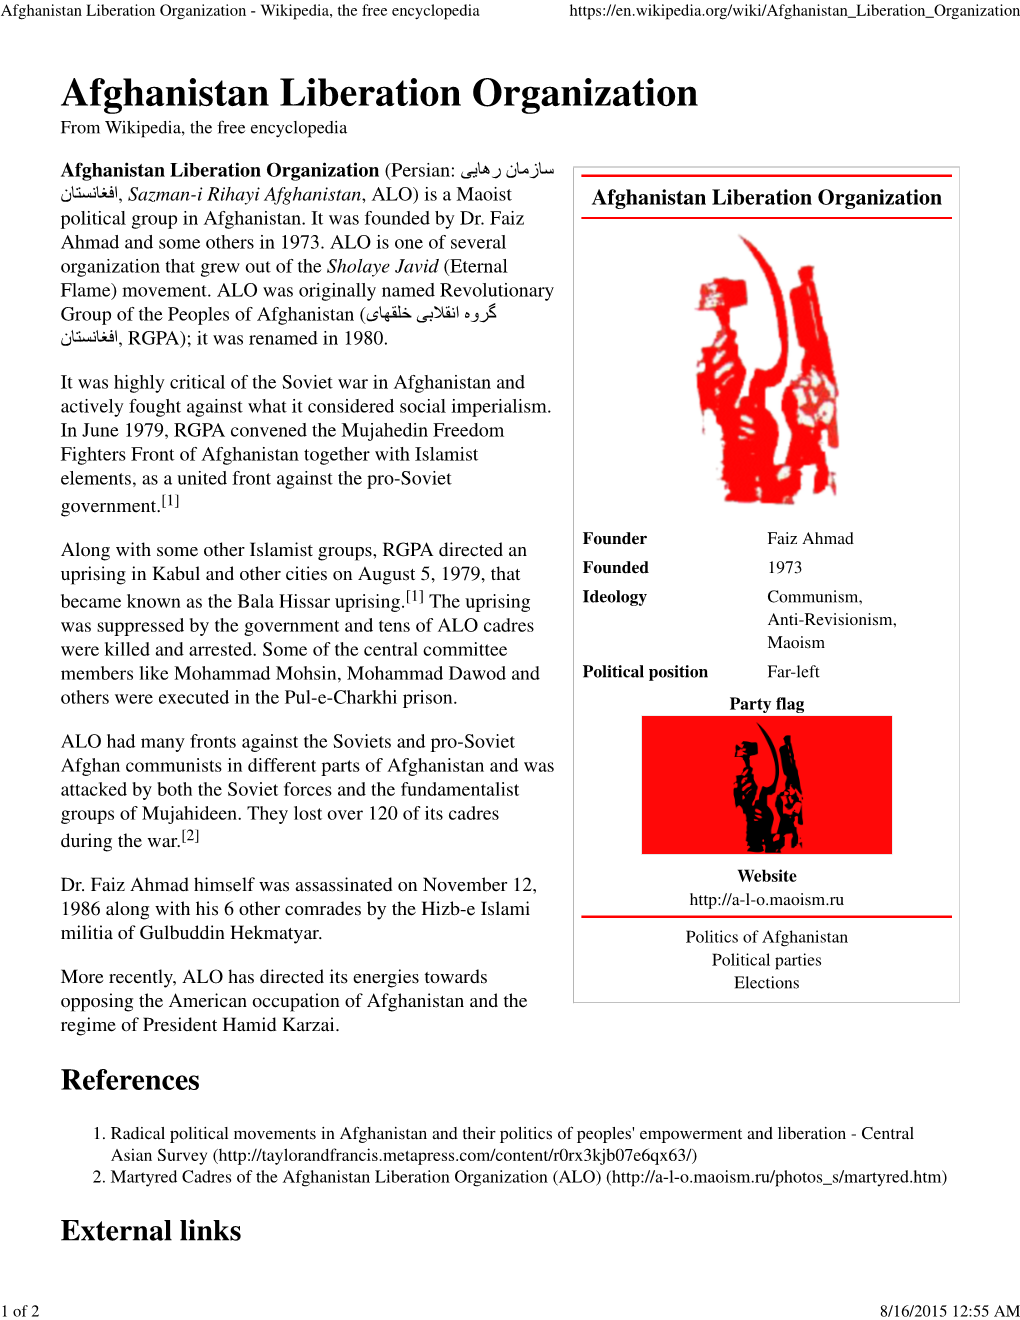 Afghanistan Liberation Organization - Wikipedia, the Free Encyclopedia